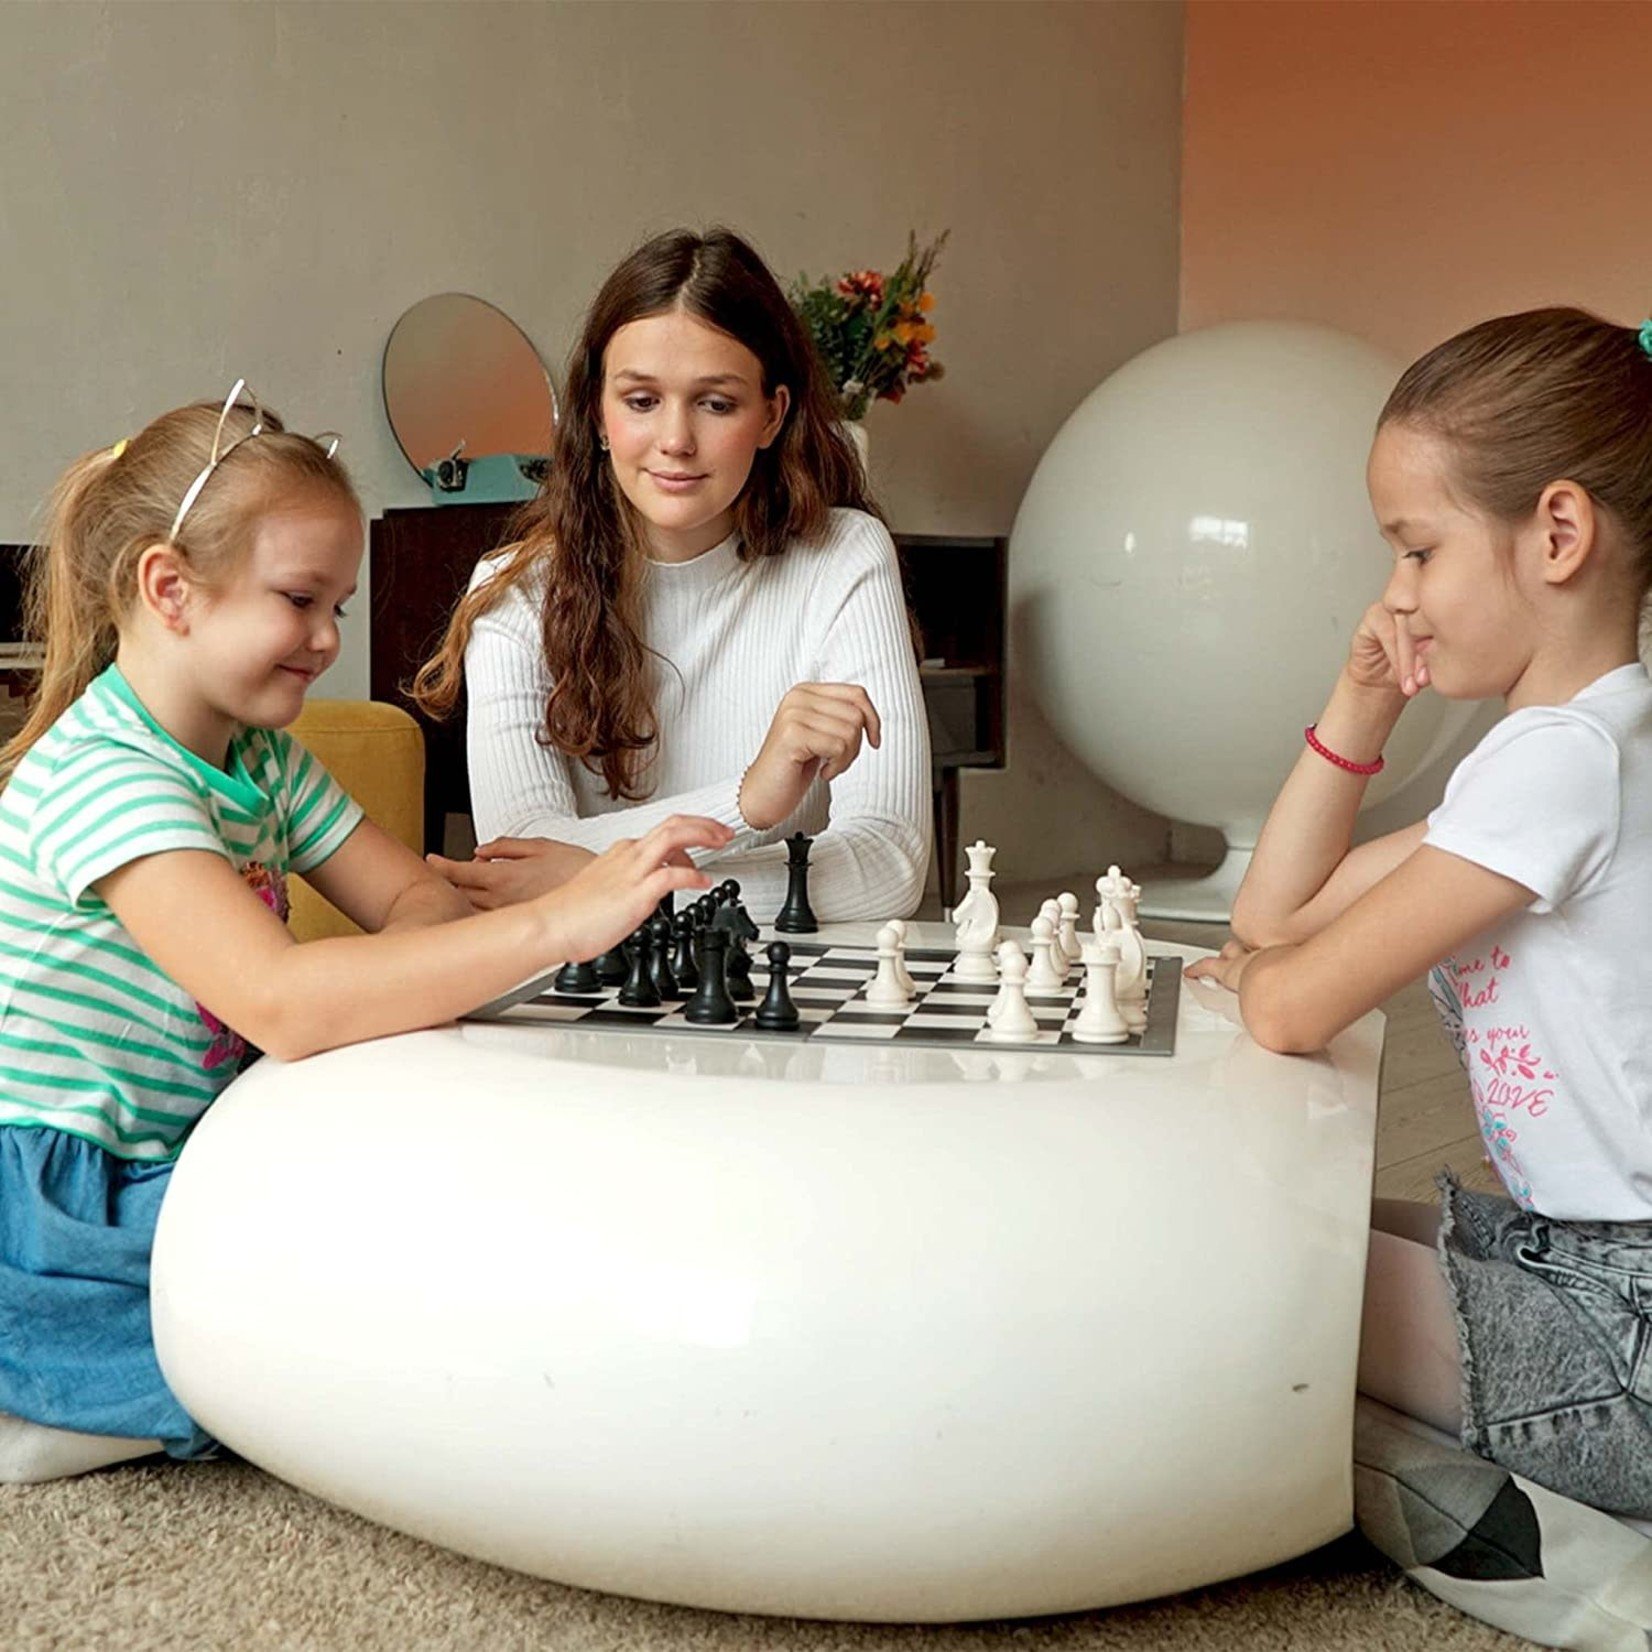 World Chess Chess Set: World Chess Championship Design (Academy Edition)